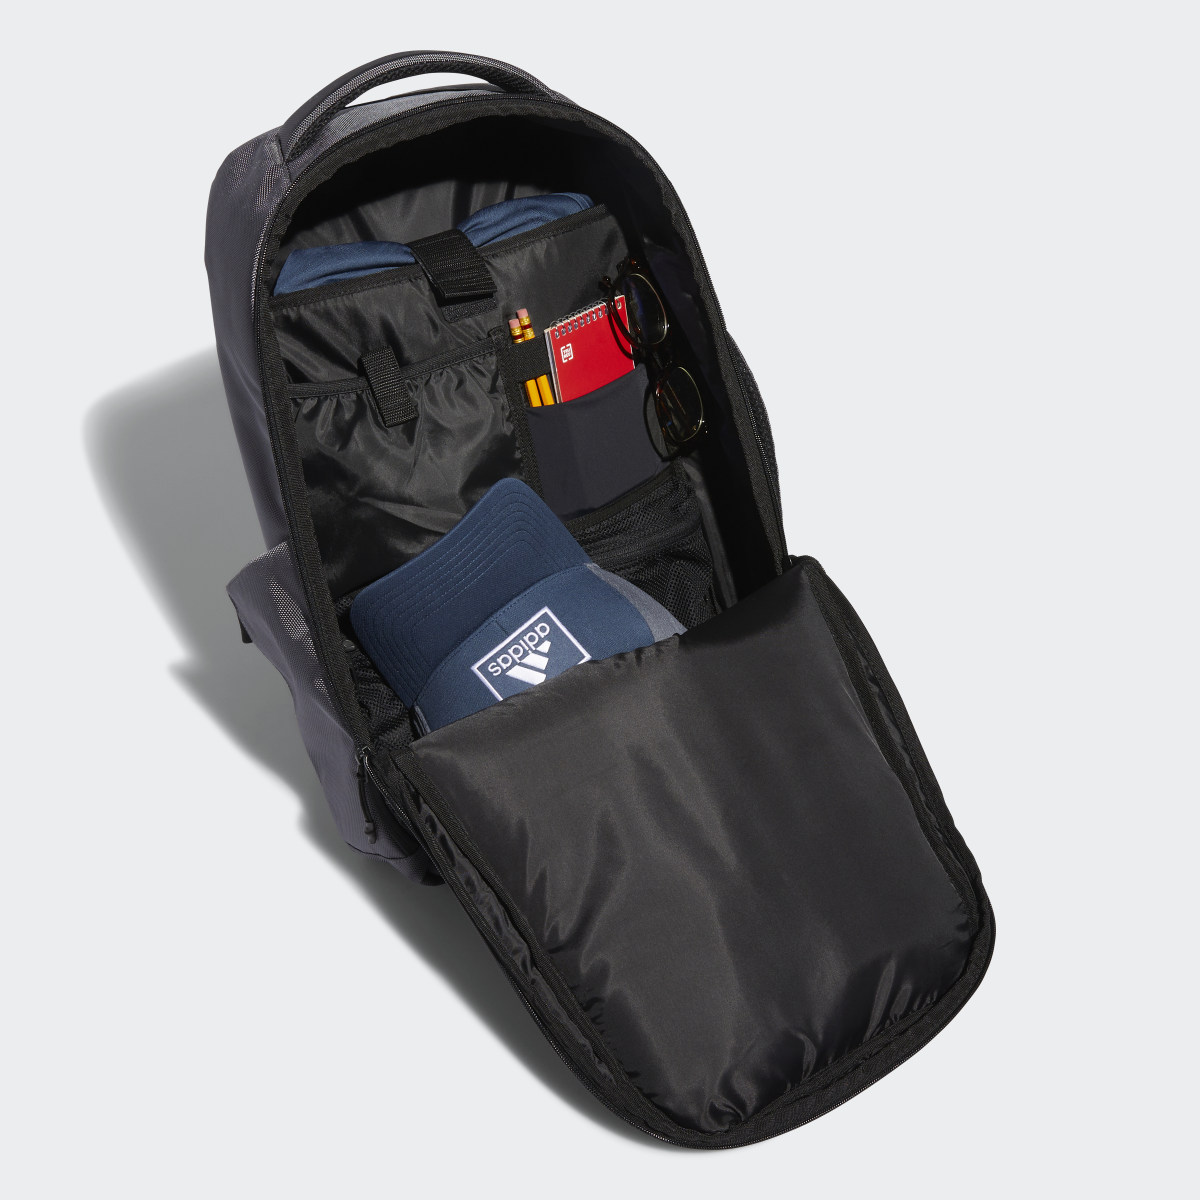 Adidas Golf Premium Backpack. 5